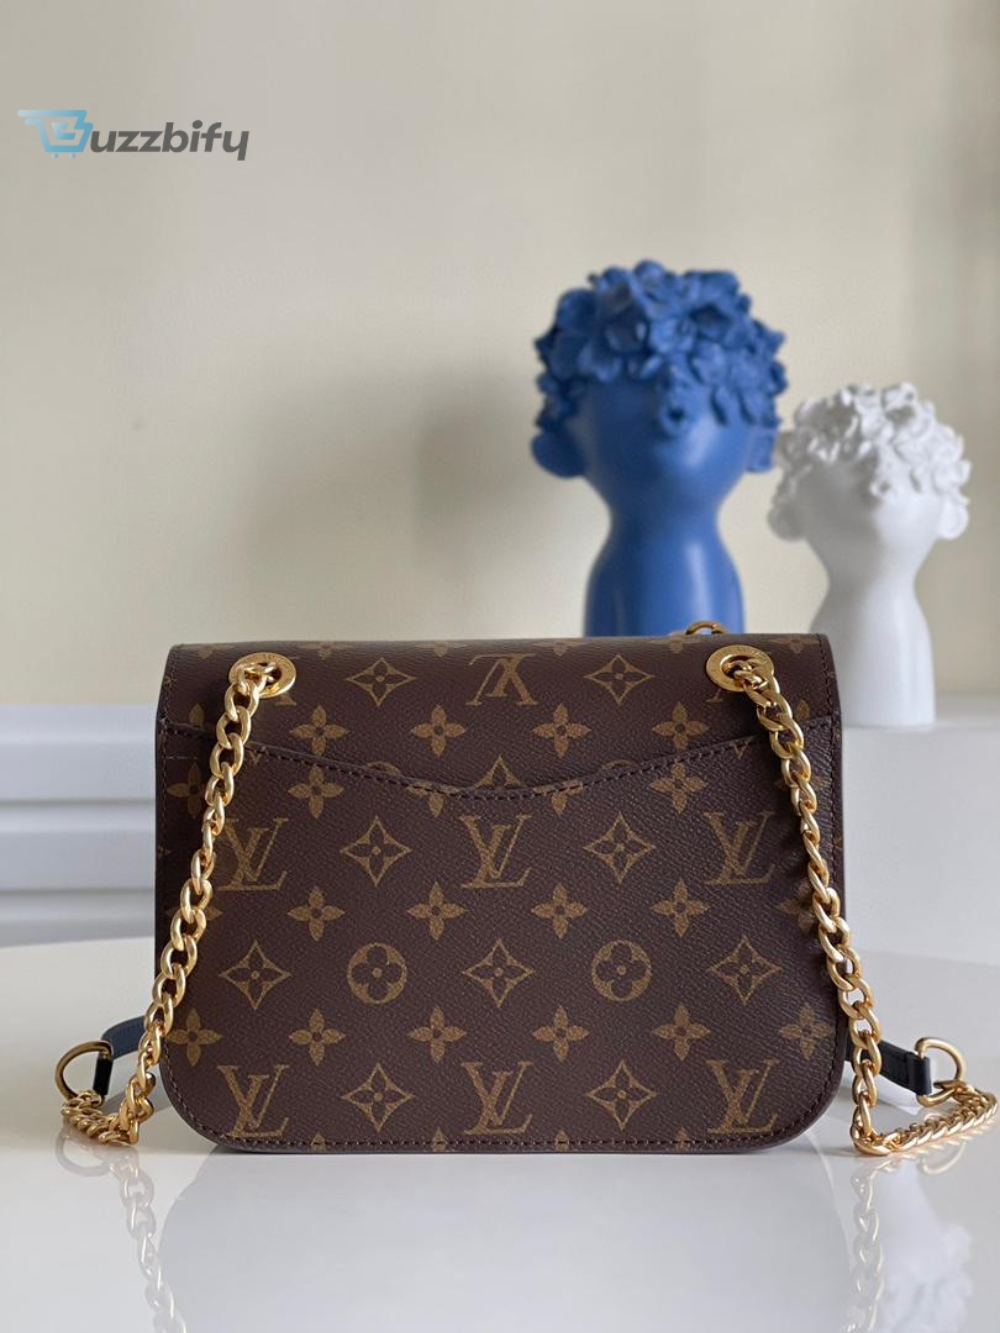 Louis Vuitton Passy Monogram Canvas For Women, Women’s Handbags, Shoulder Bags And Crossbody Bags 9.1in/23cm LV M45592
